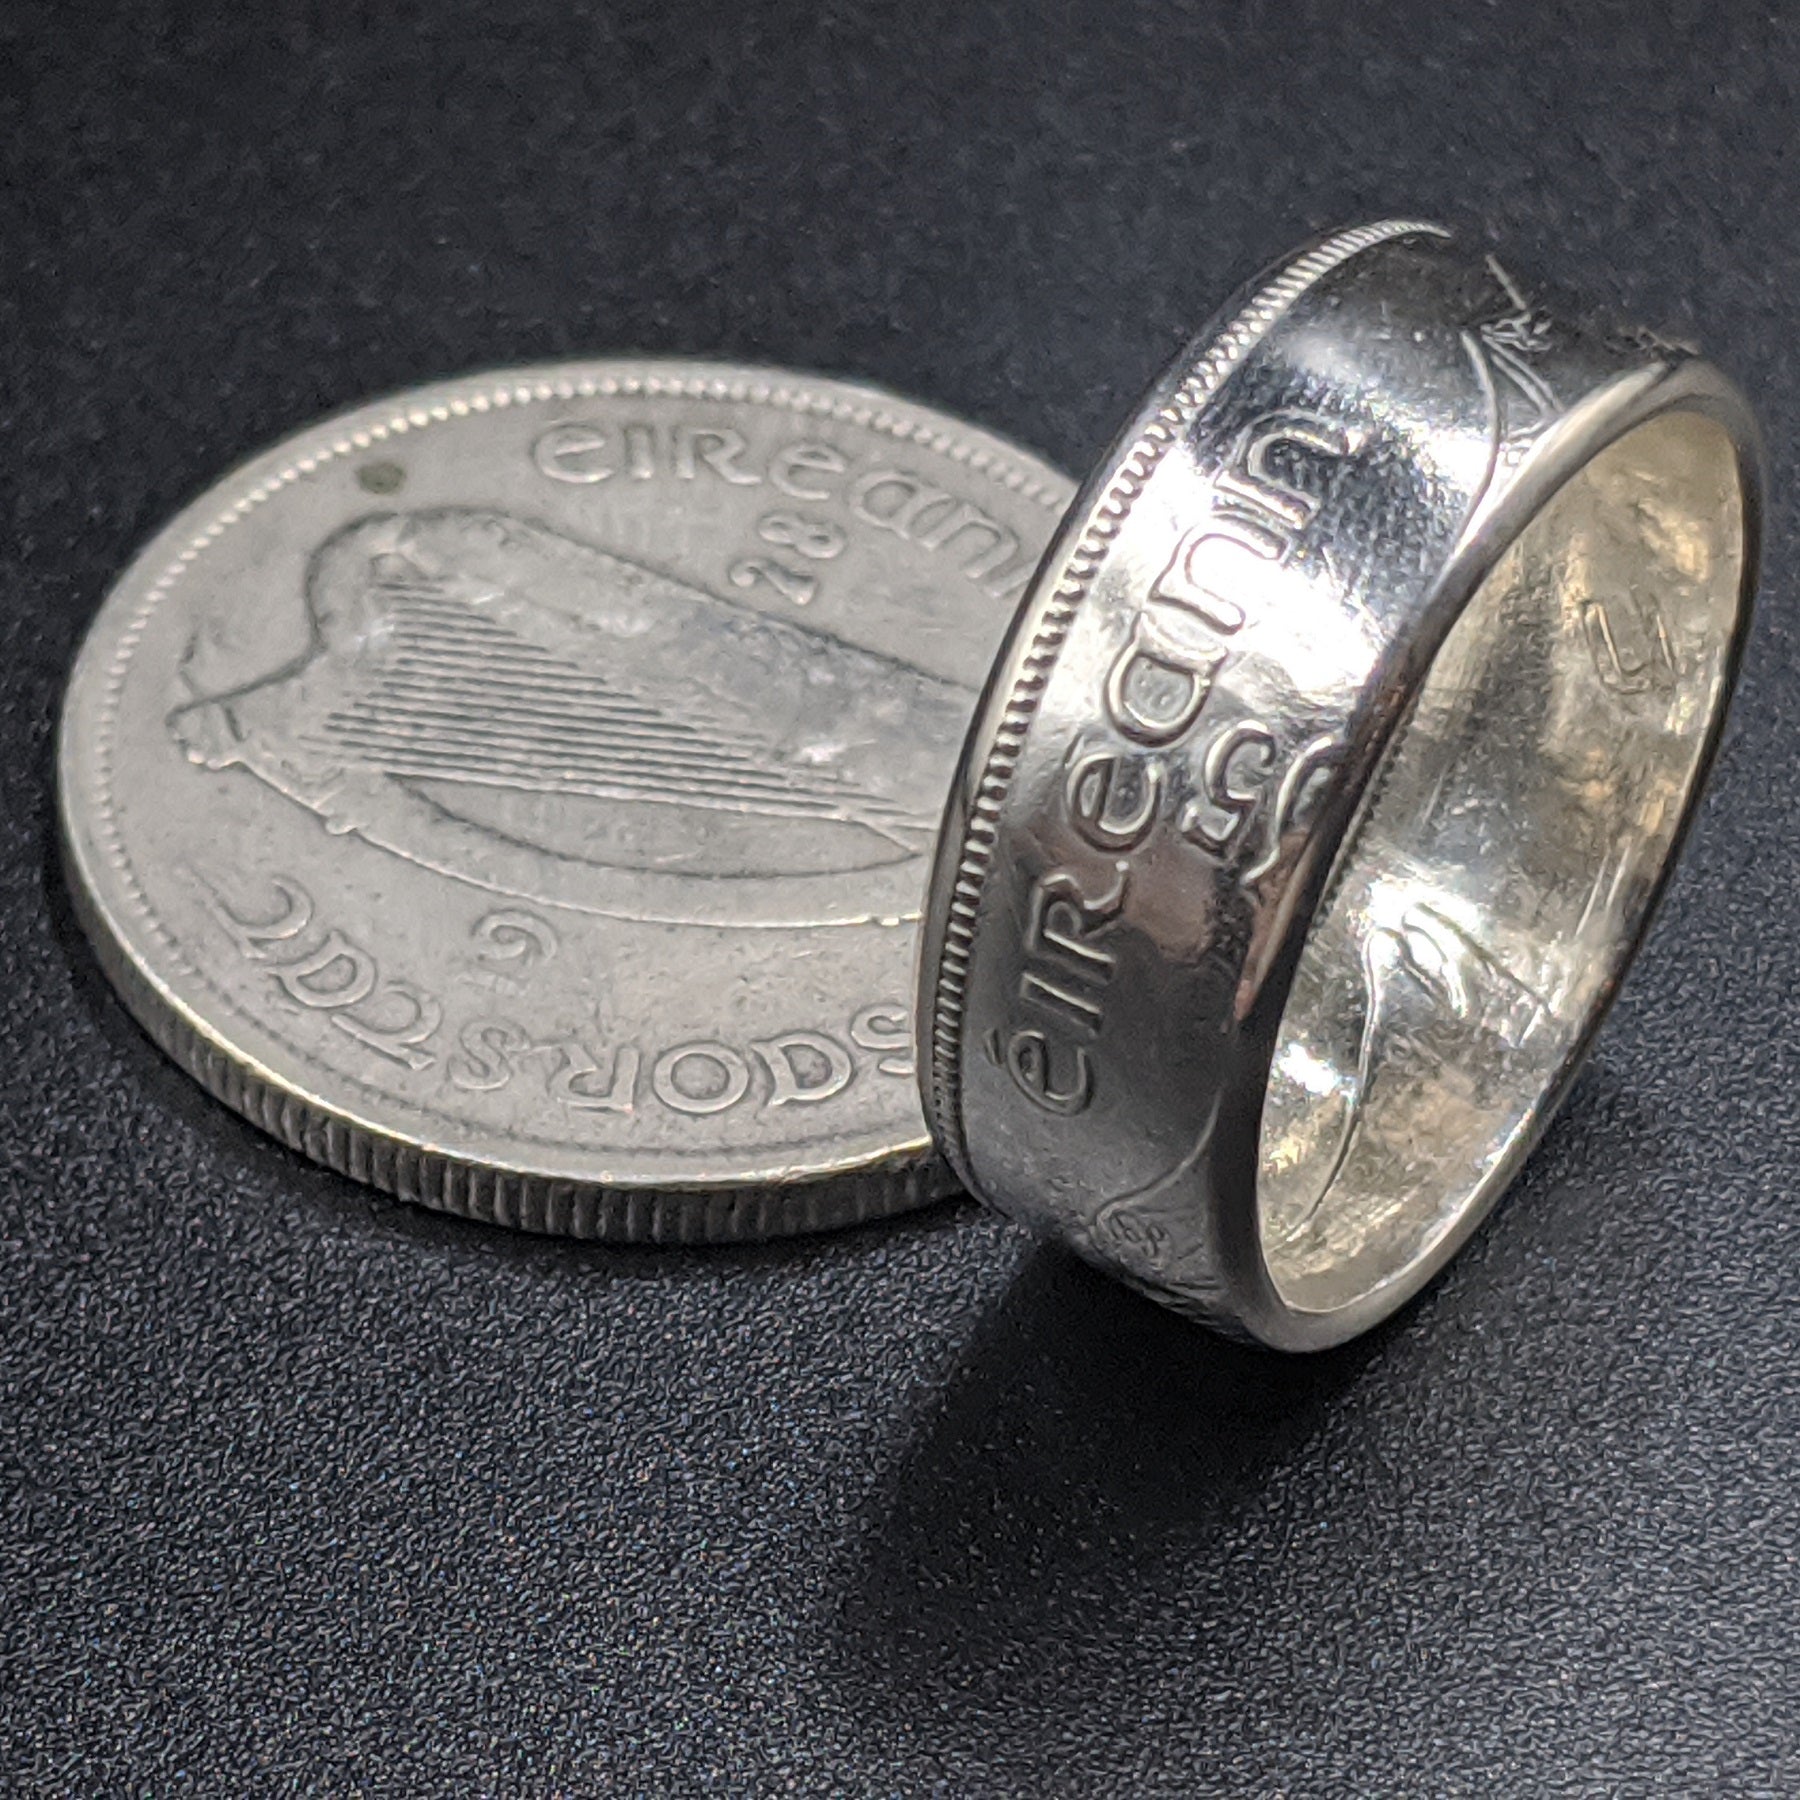 Irish Silver Half Crown Coin Ring